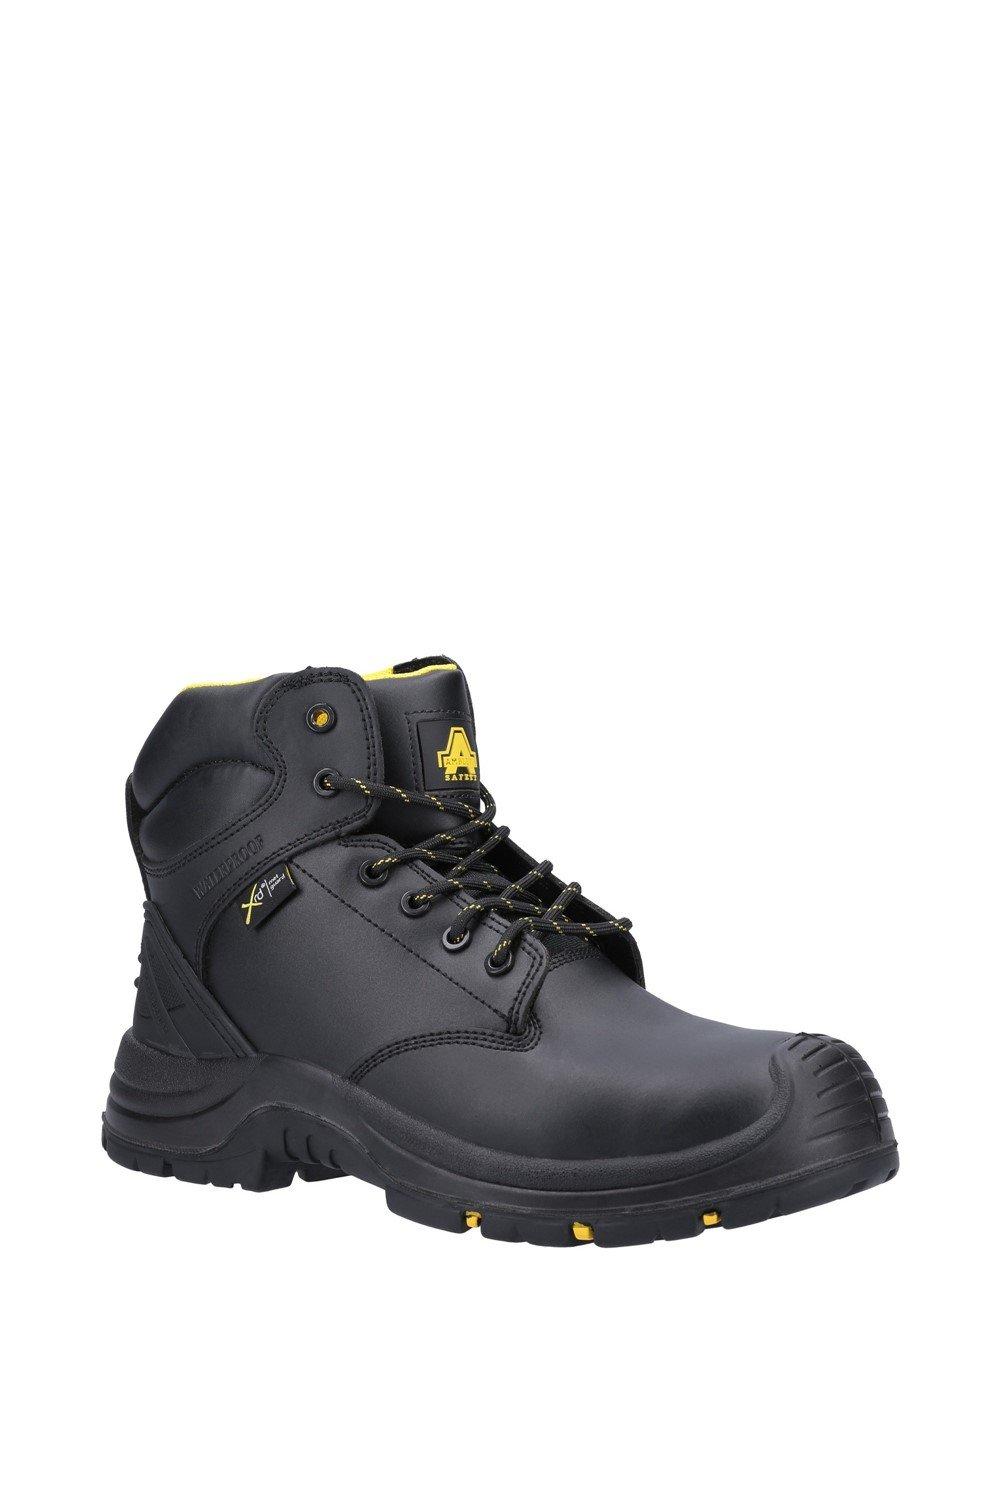 'AS303C Wrekin' Metatarsal Safety Footwear